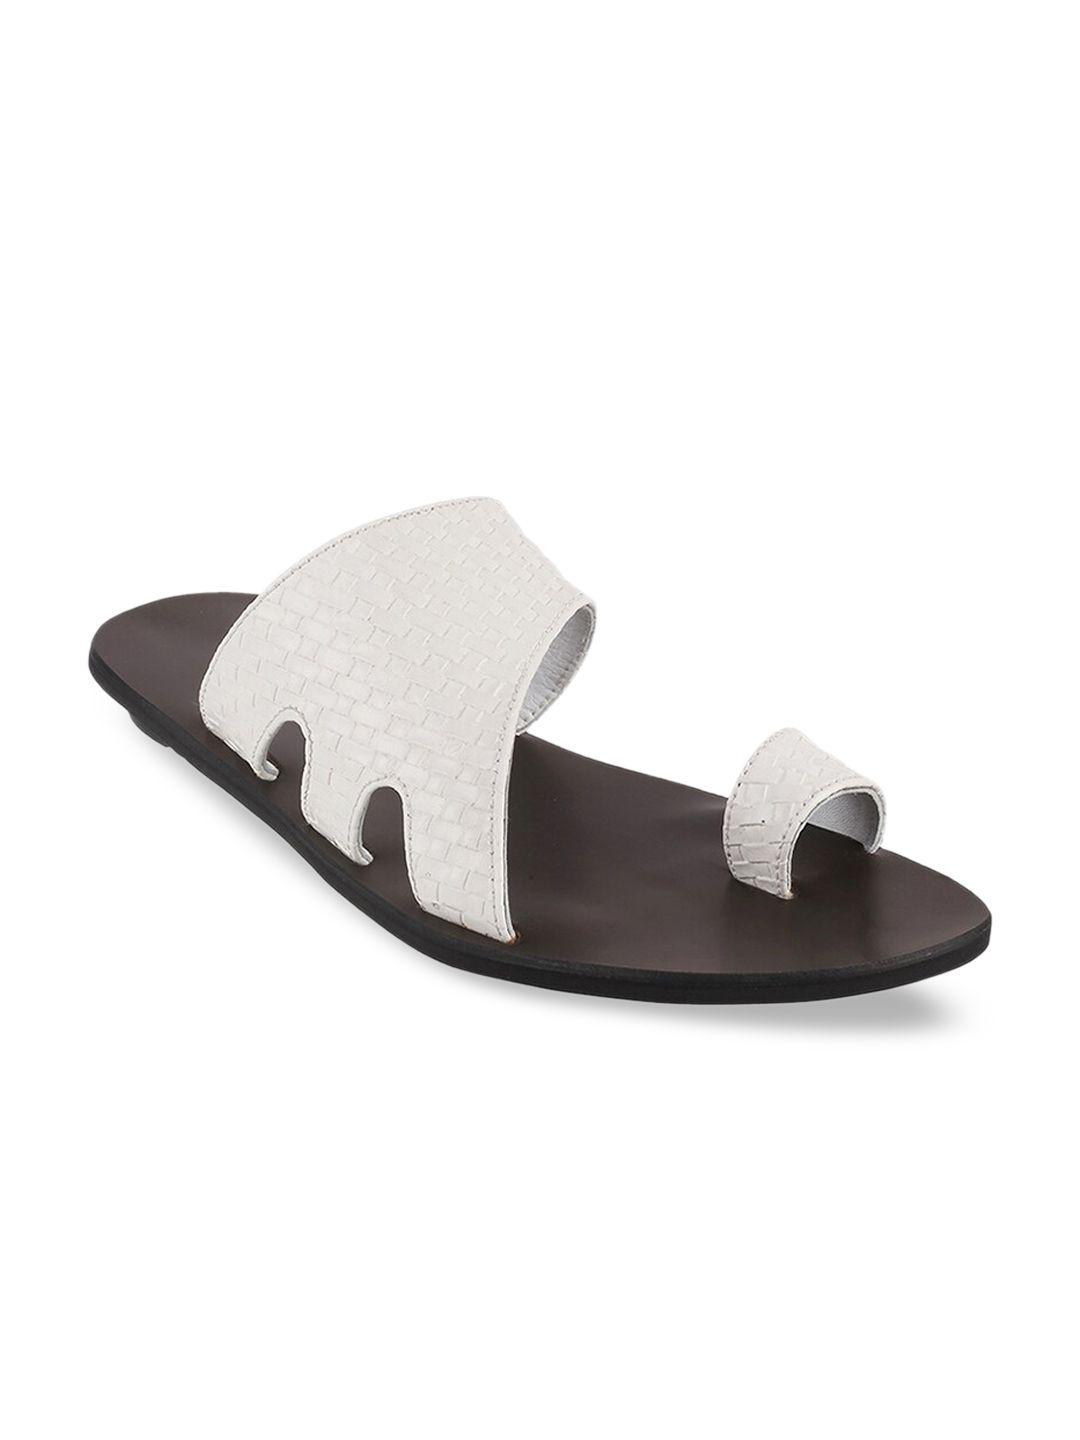 mochi men white & black leather comfort sandals